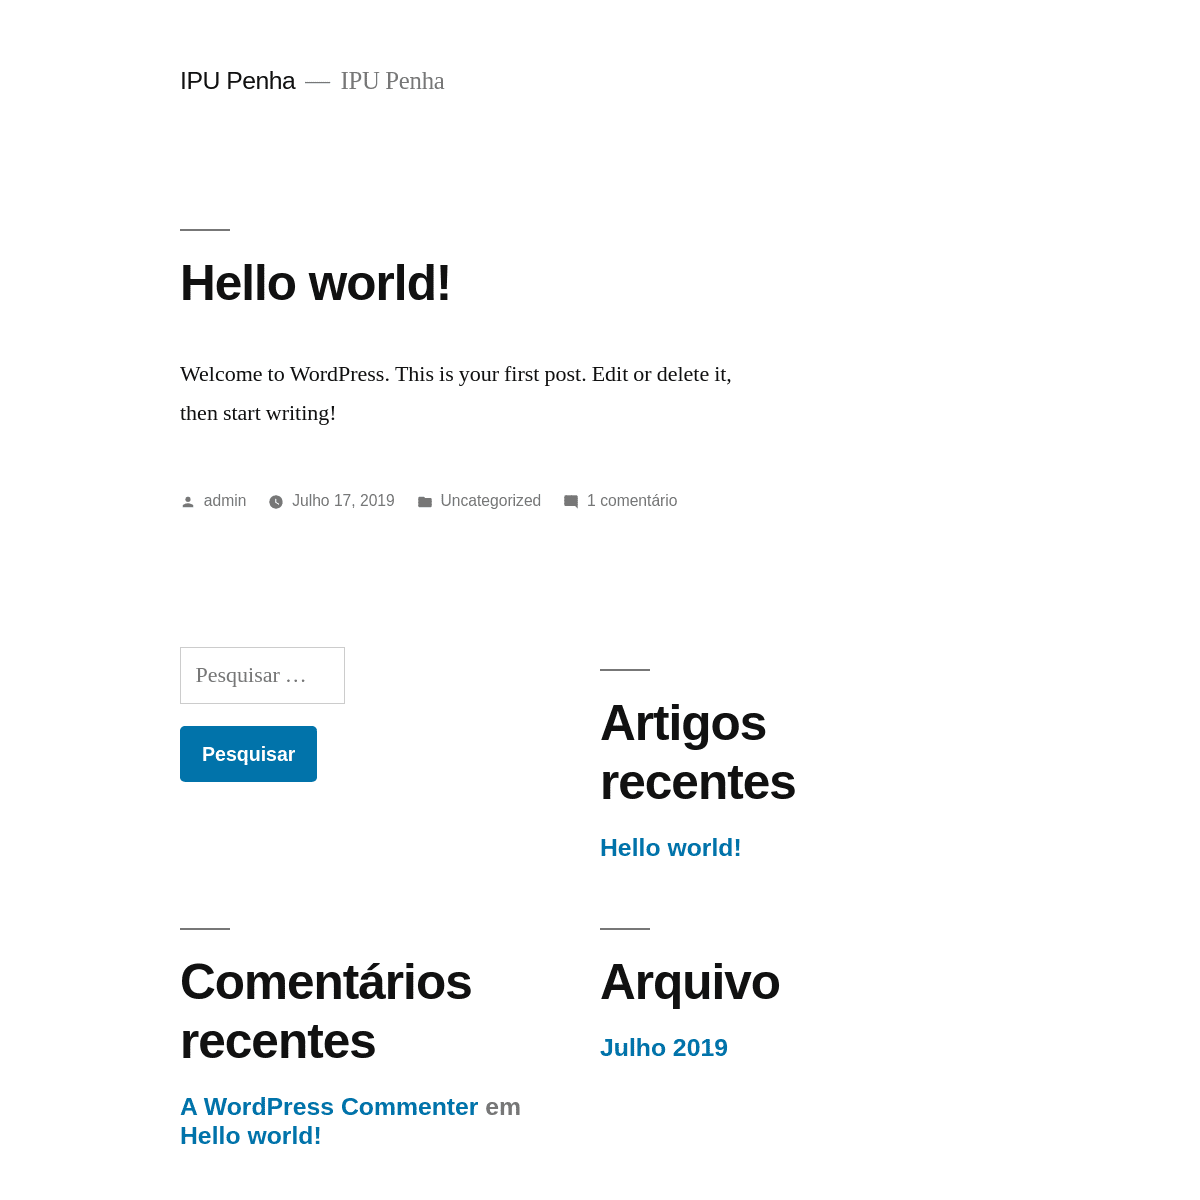 A complete backup of https://ipupenha.org.br